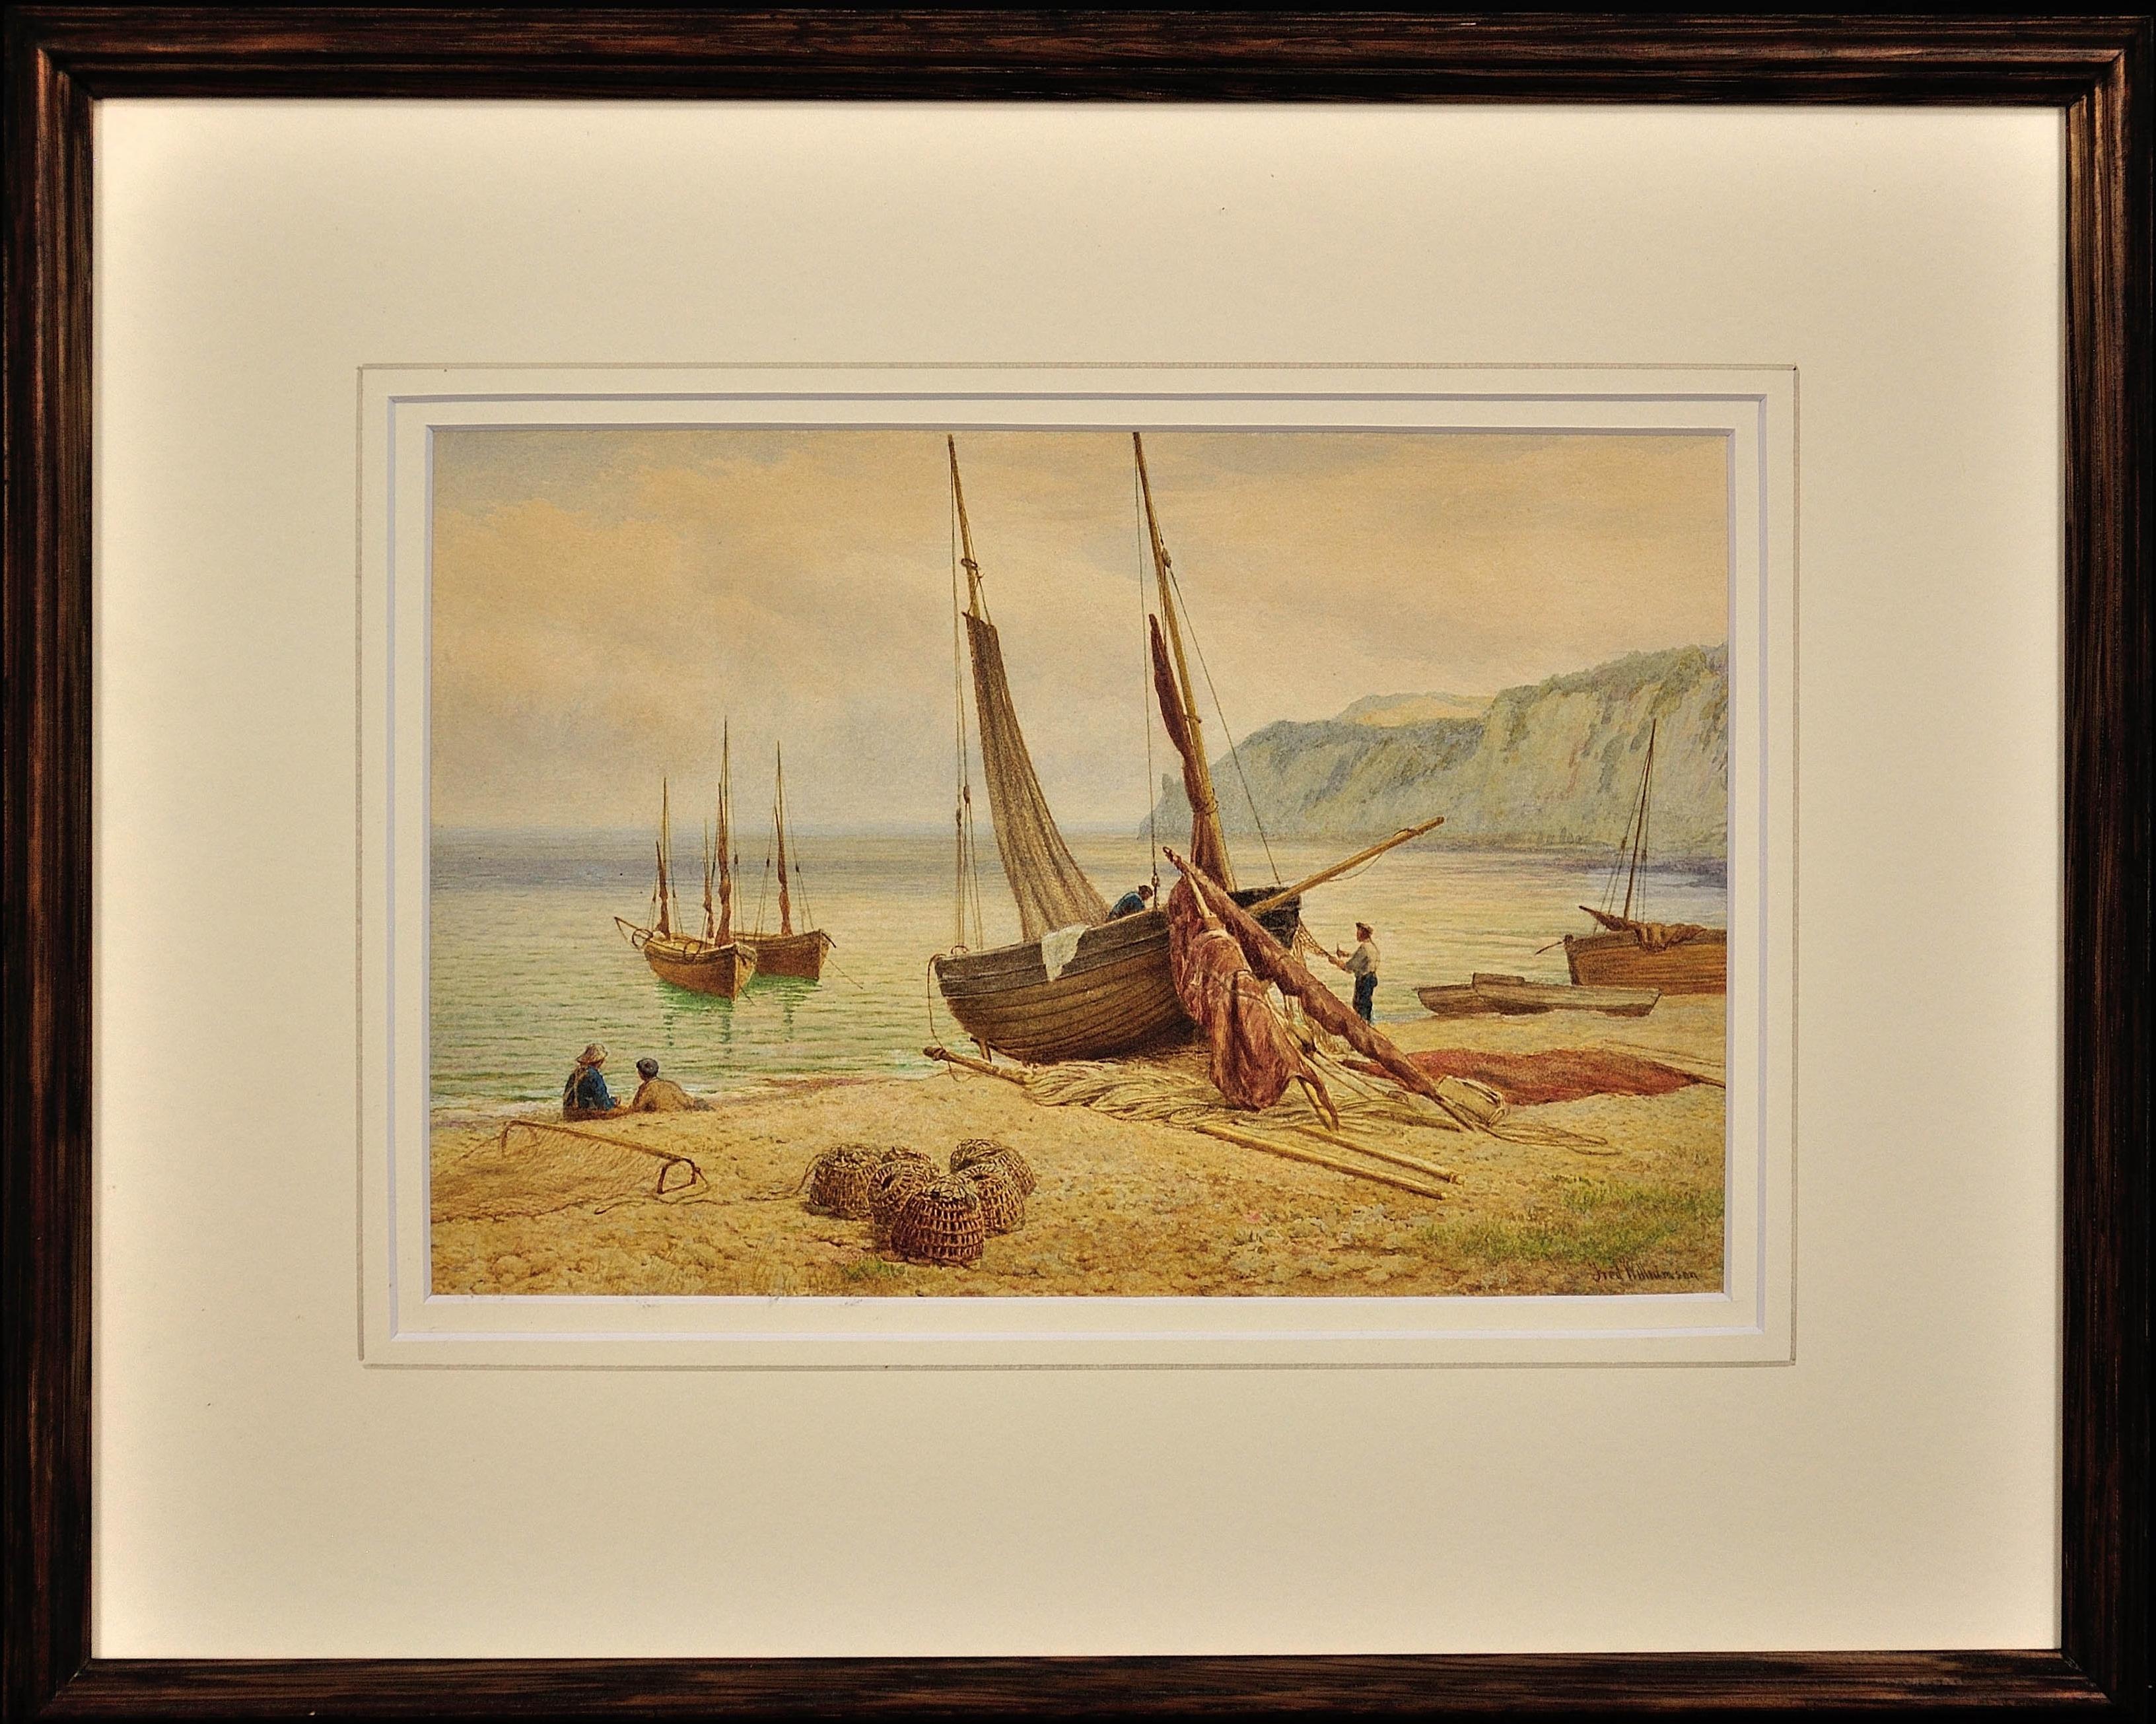 Frederick Williamson Landscape Art - Fishing Boats & Fishermen on Beer Beach, East Devon. A Very Fine Watercolor.